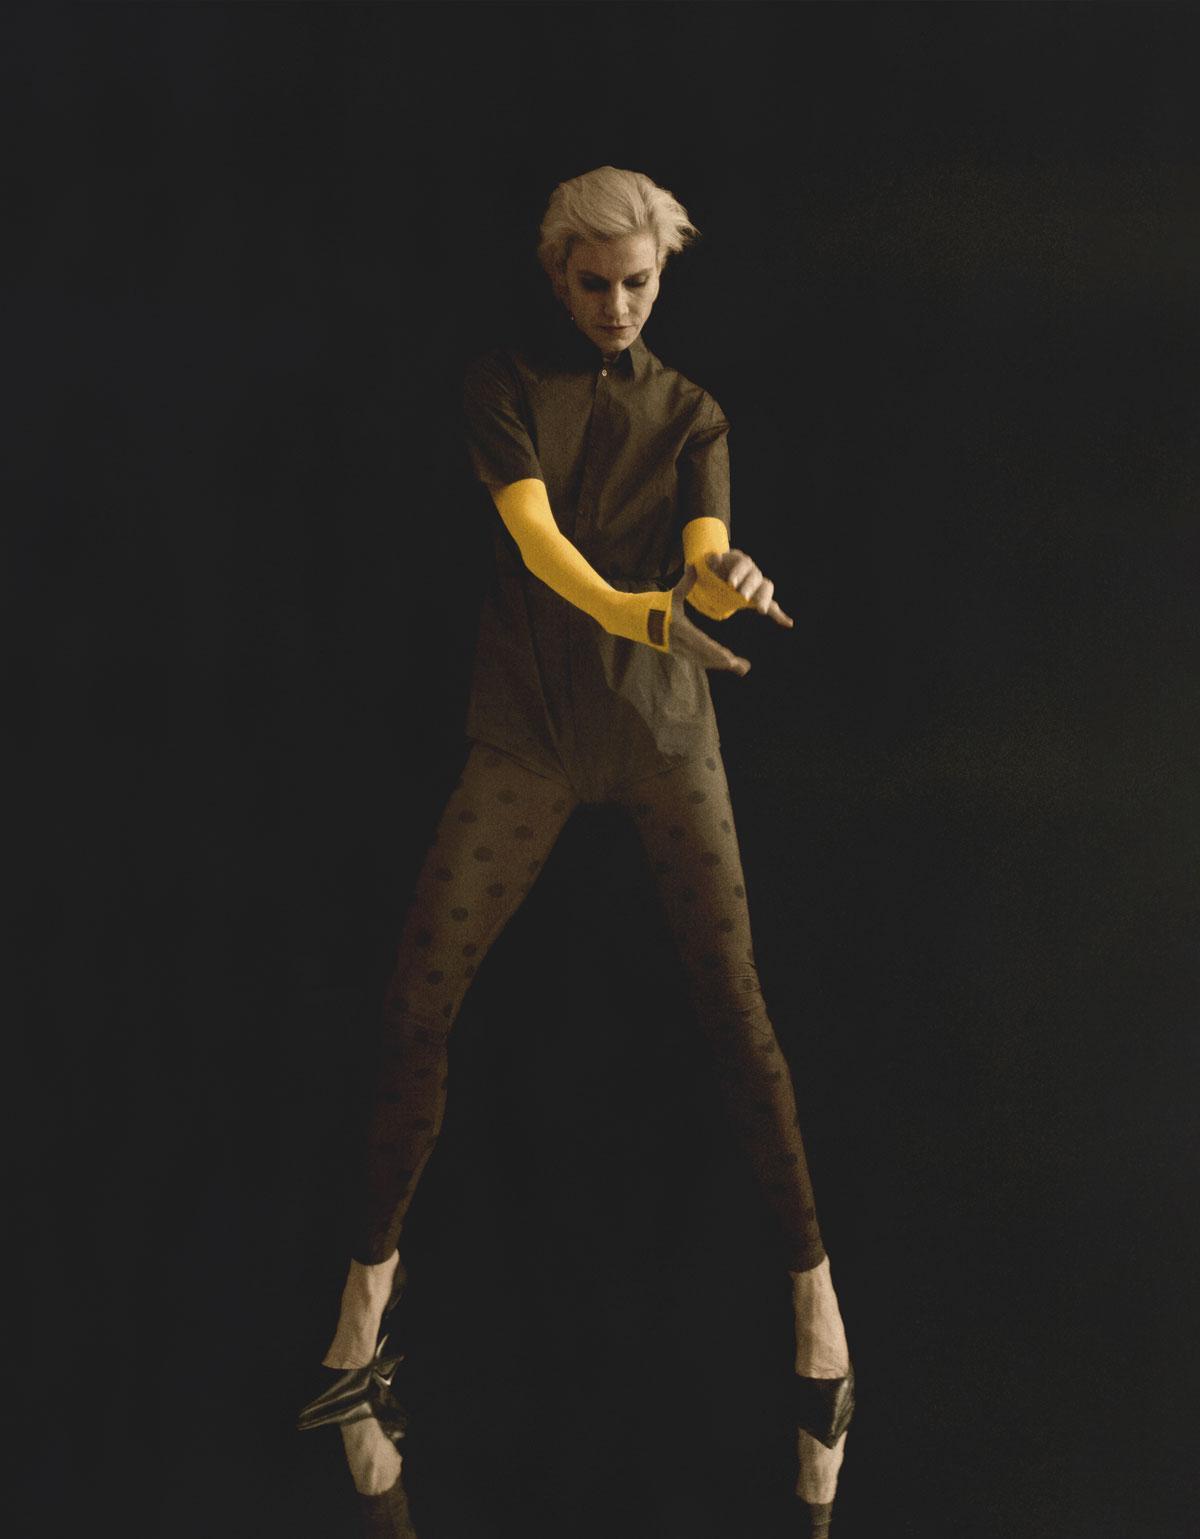 Katoenen hemd met romperafwerking, gele nylon top, bruine nylon legging met stippen en zwartleren sleehakken, alles Raf Simons.